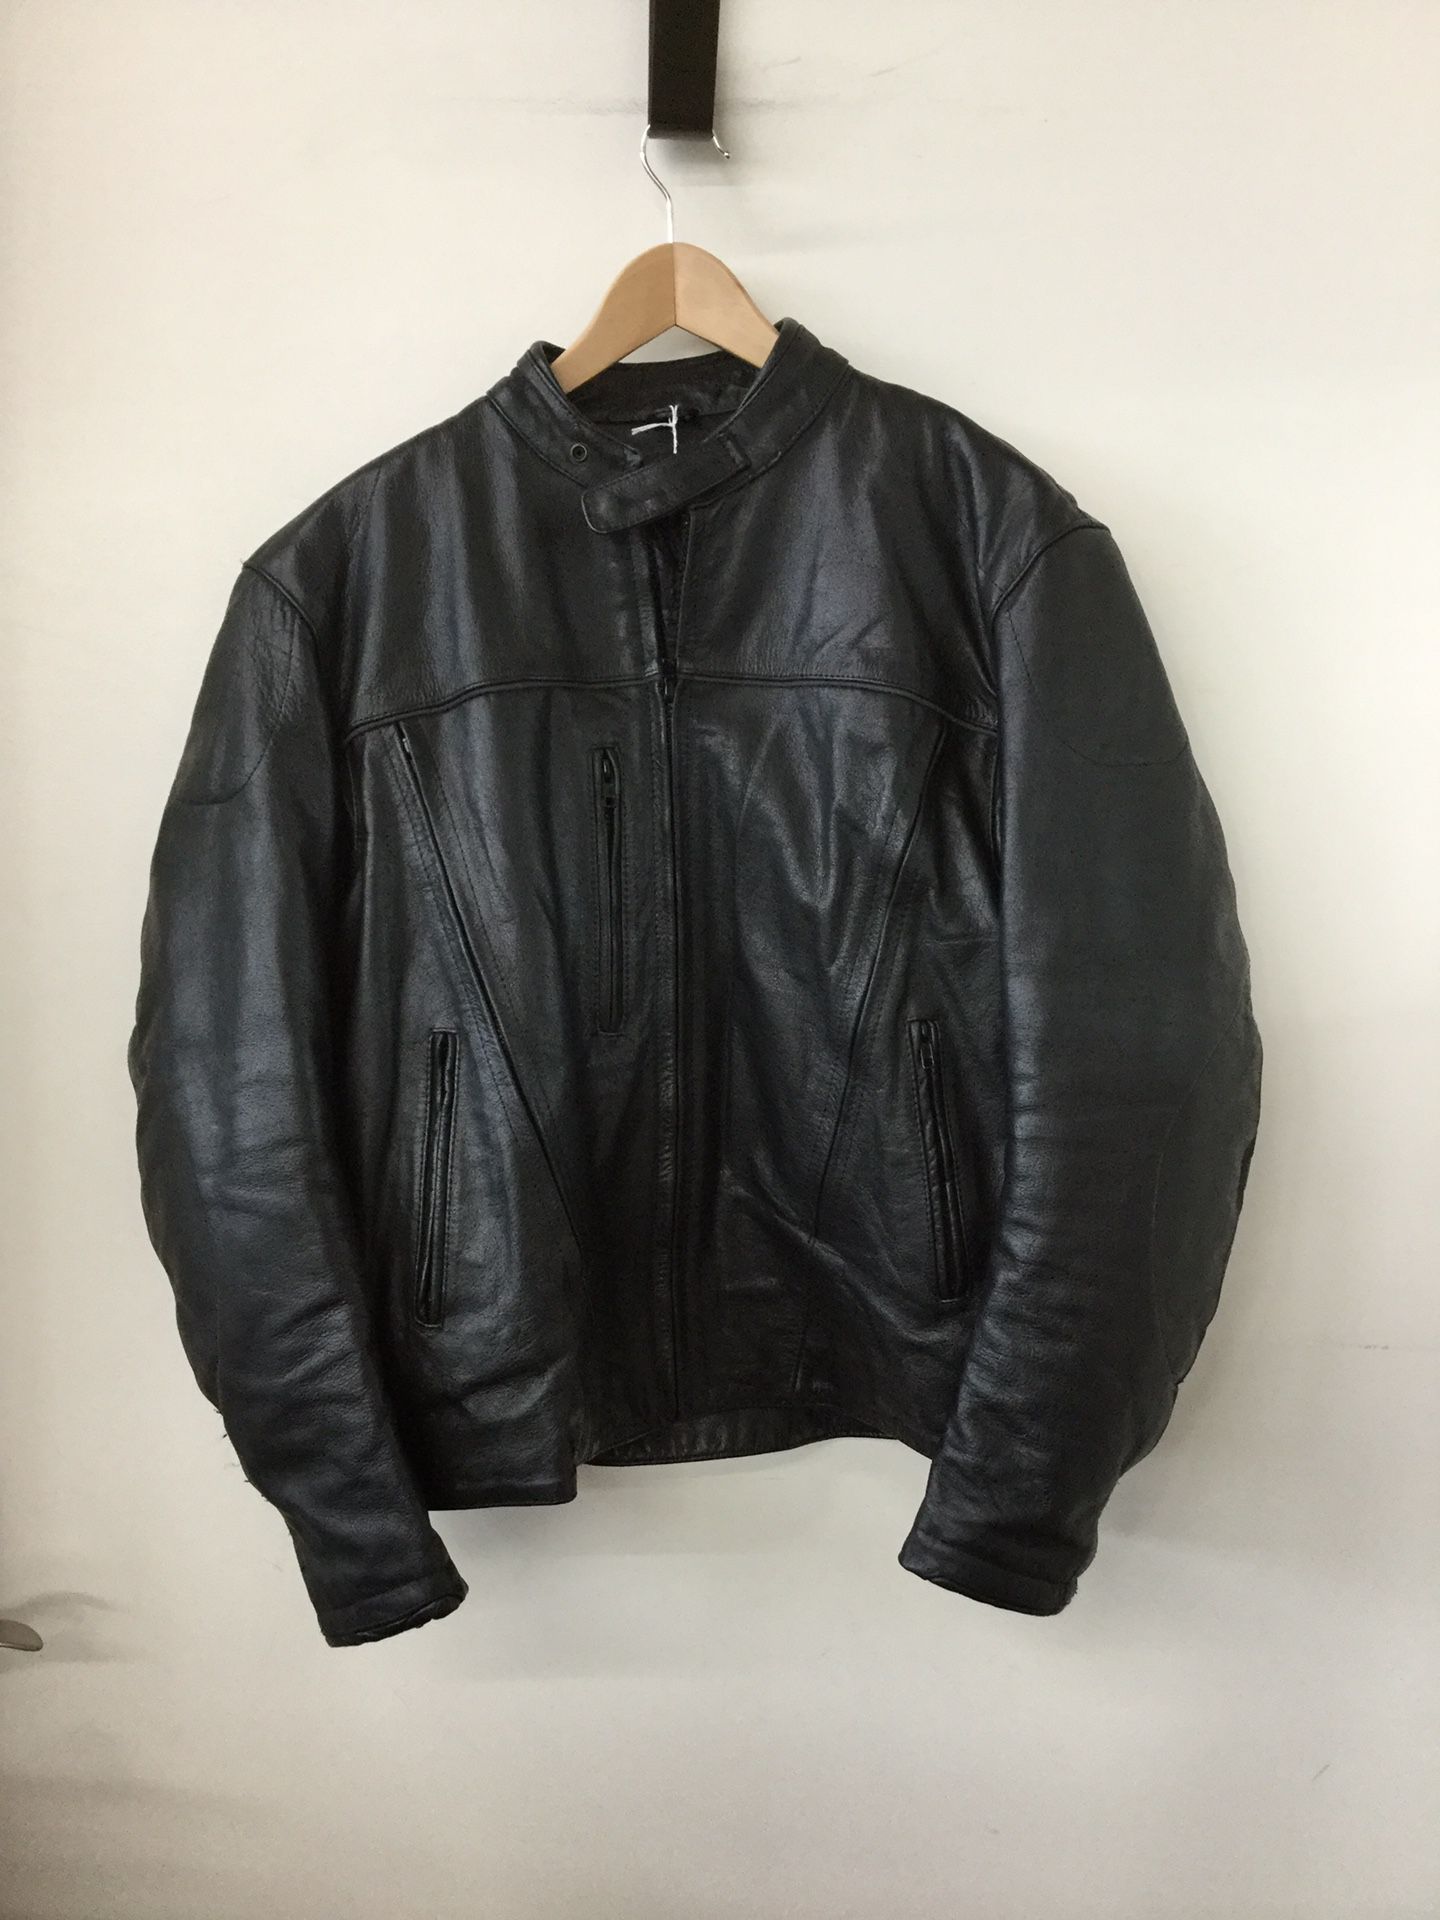 X Element Advanced Motorcycle Gear Men’s XL Leather Jacket